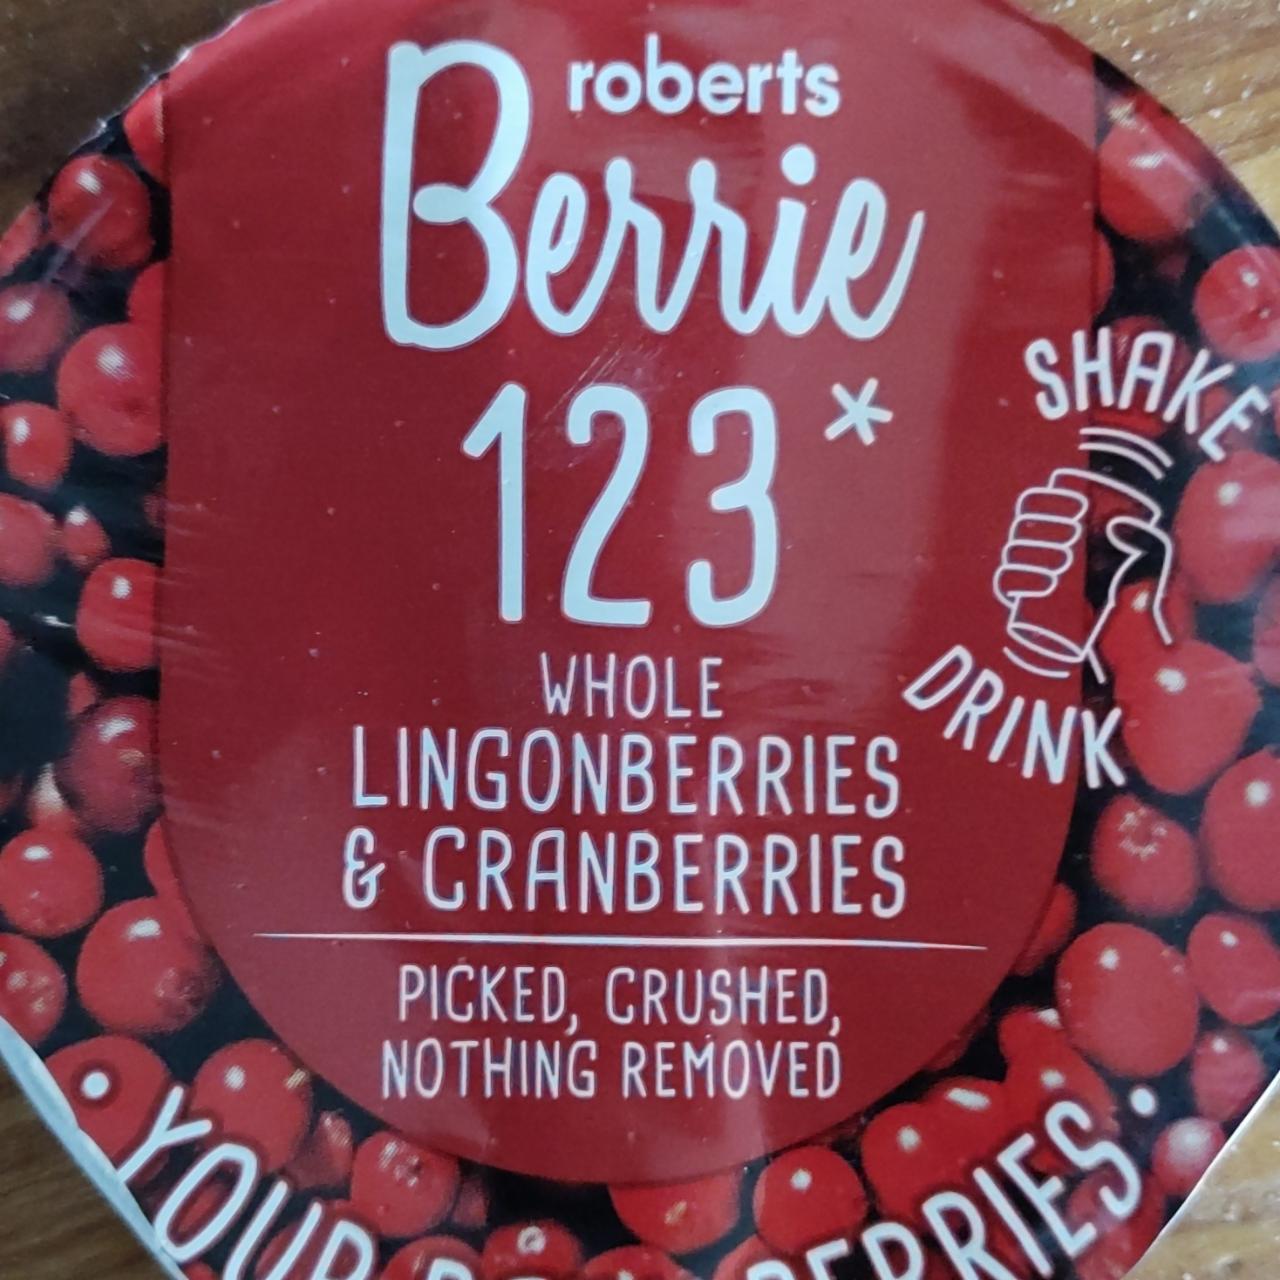 Fotografie - Whole lingonberries & cranberries Roberts Berrie